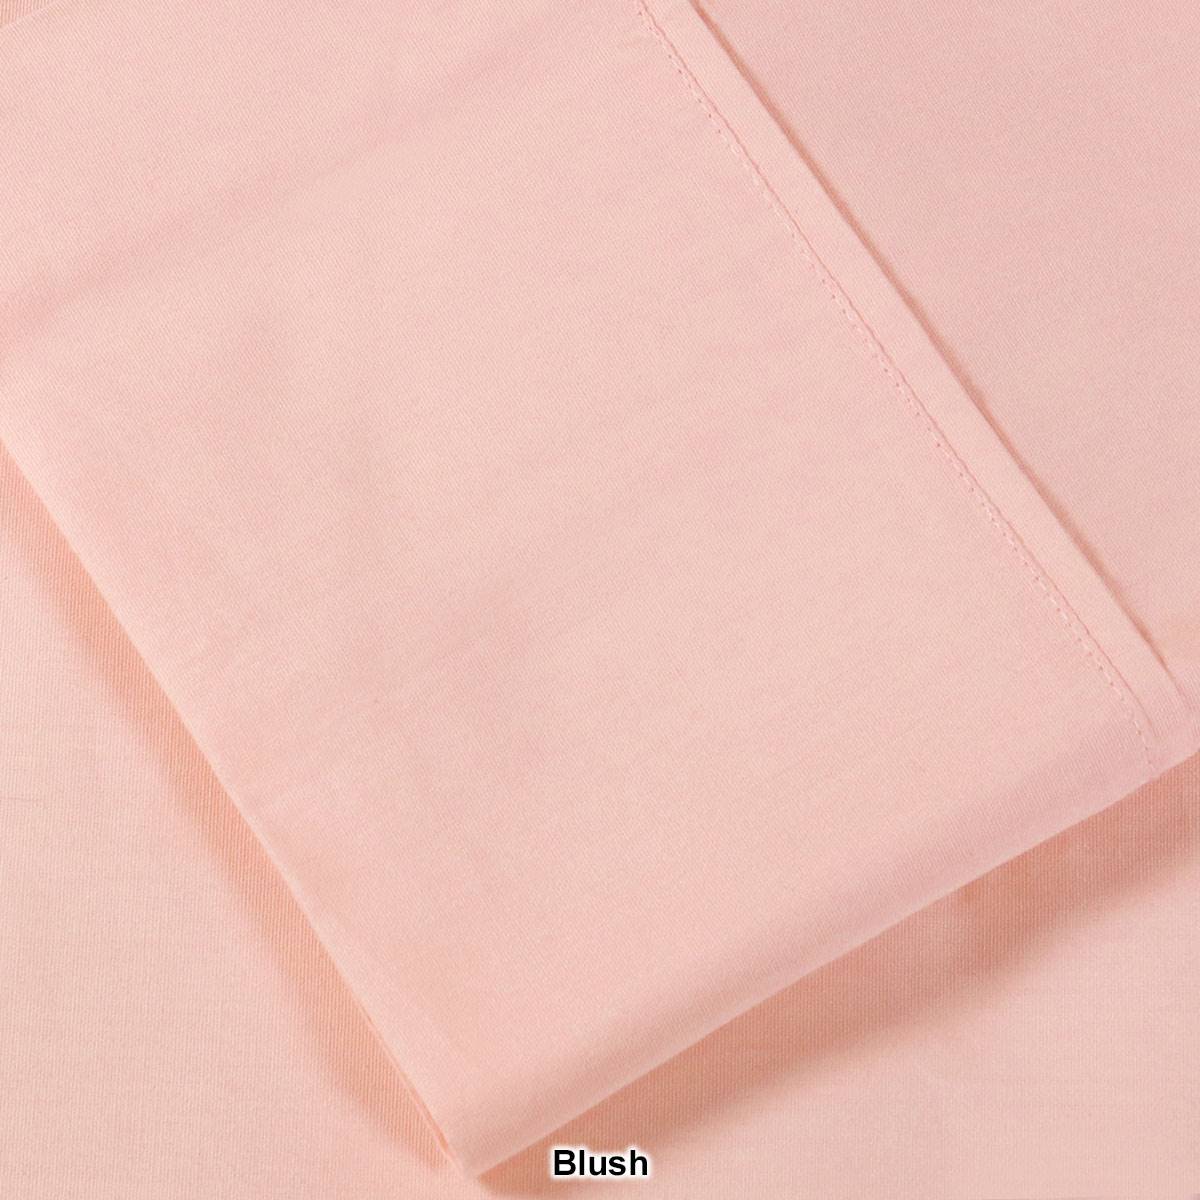 Superior 300TC Cotton Percale Pillowcase - Set Of 2